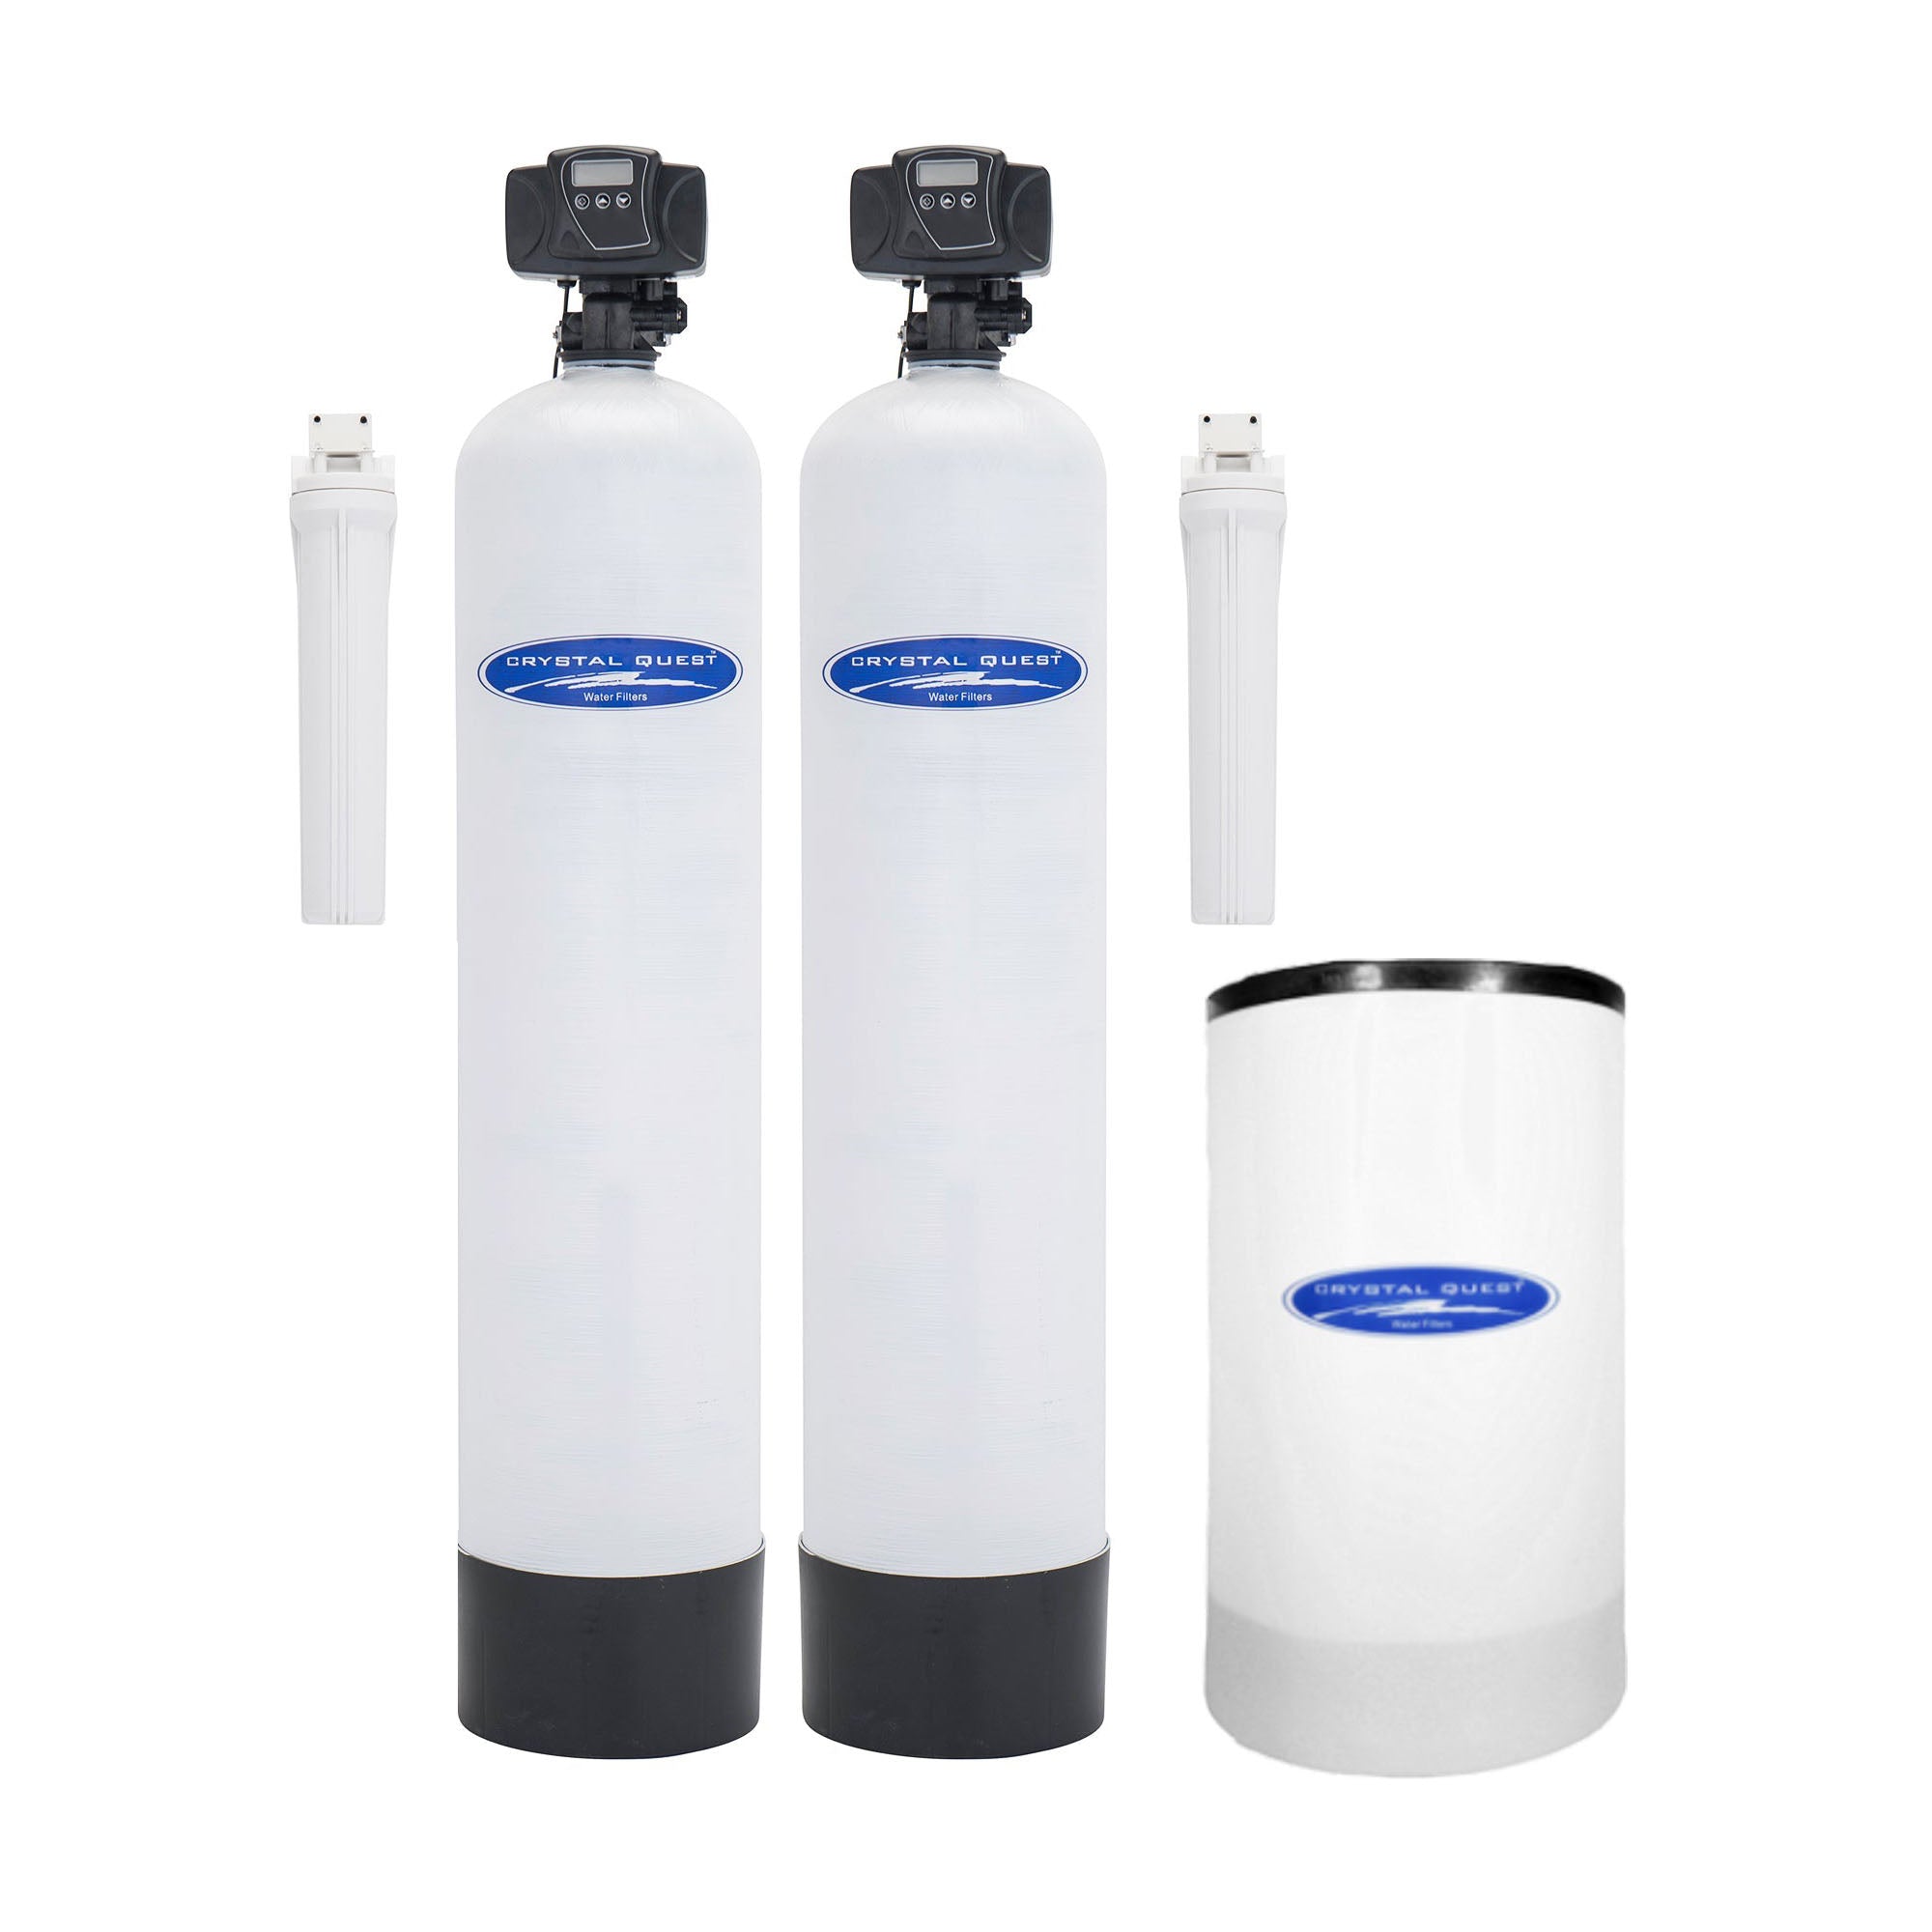 Add SMART Filter / Fiberglass / 1.5 Nitrate Whole House Water Filter - Whole House Water Filters - Crystal Quest